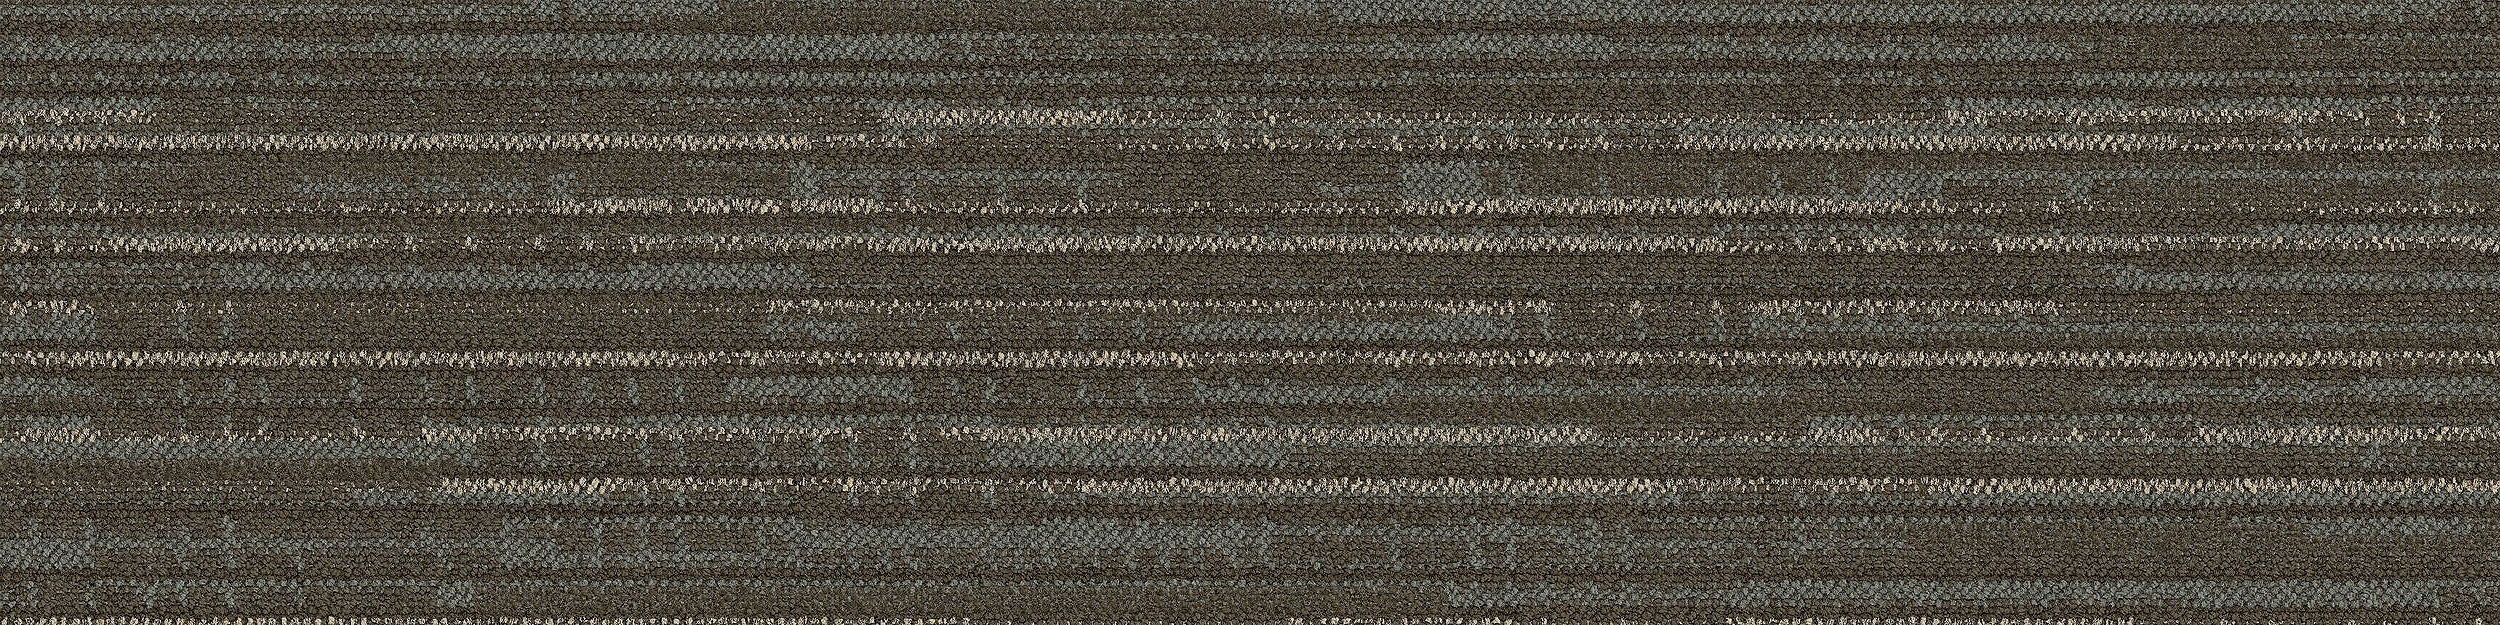 RMS 703 Carpet Tile In Retreat image number 8